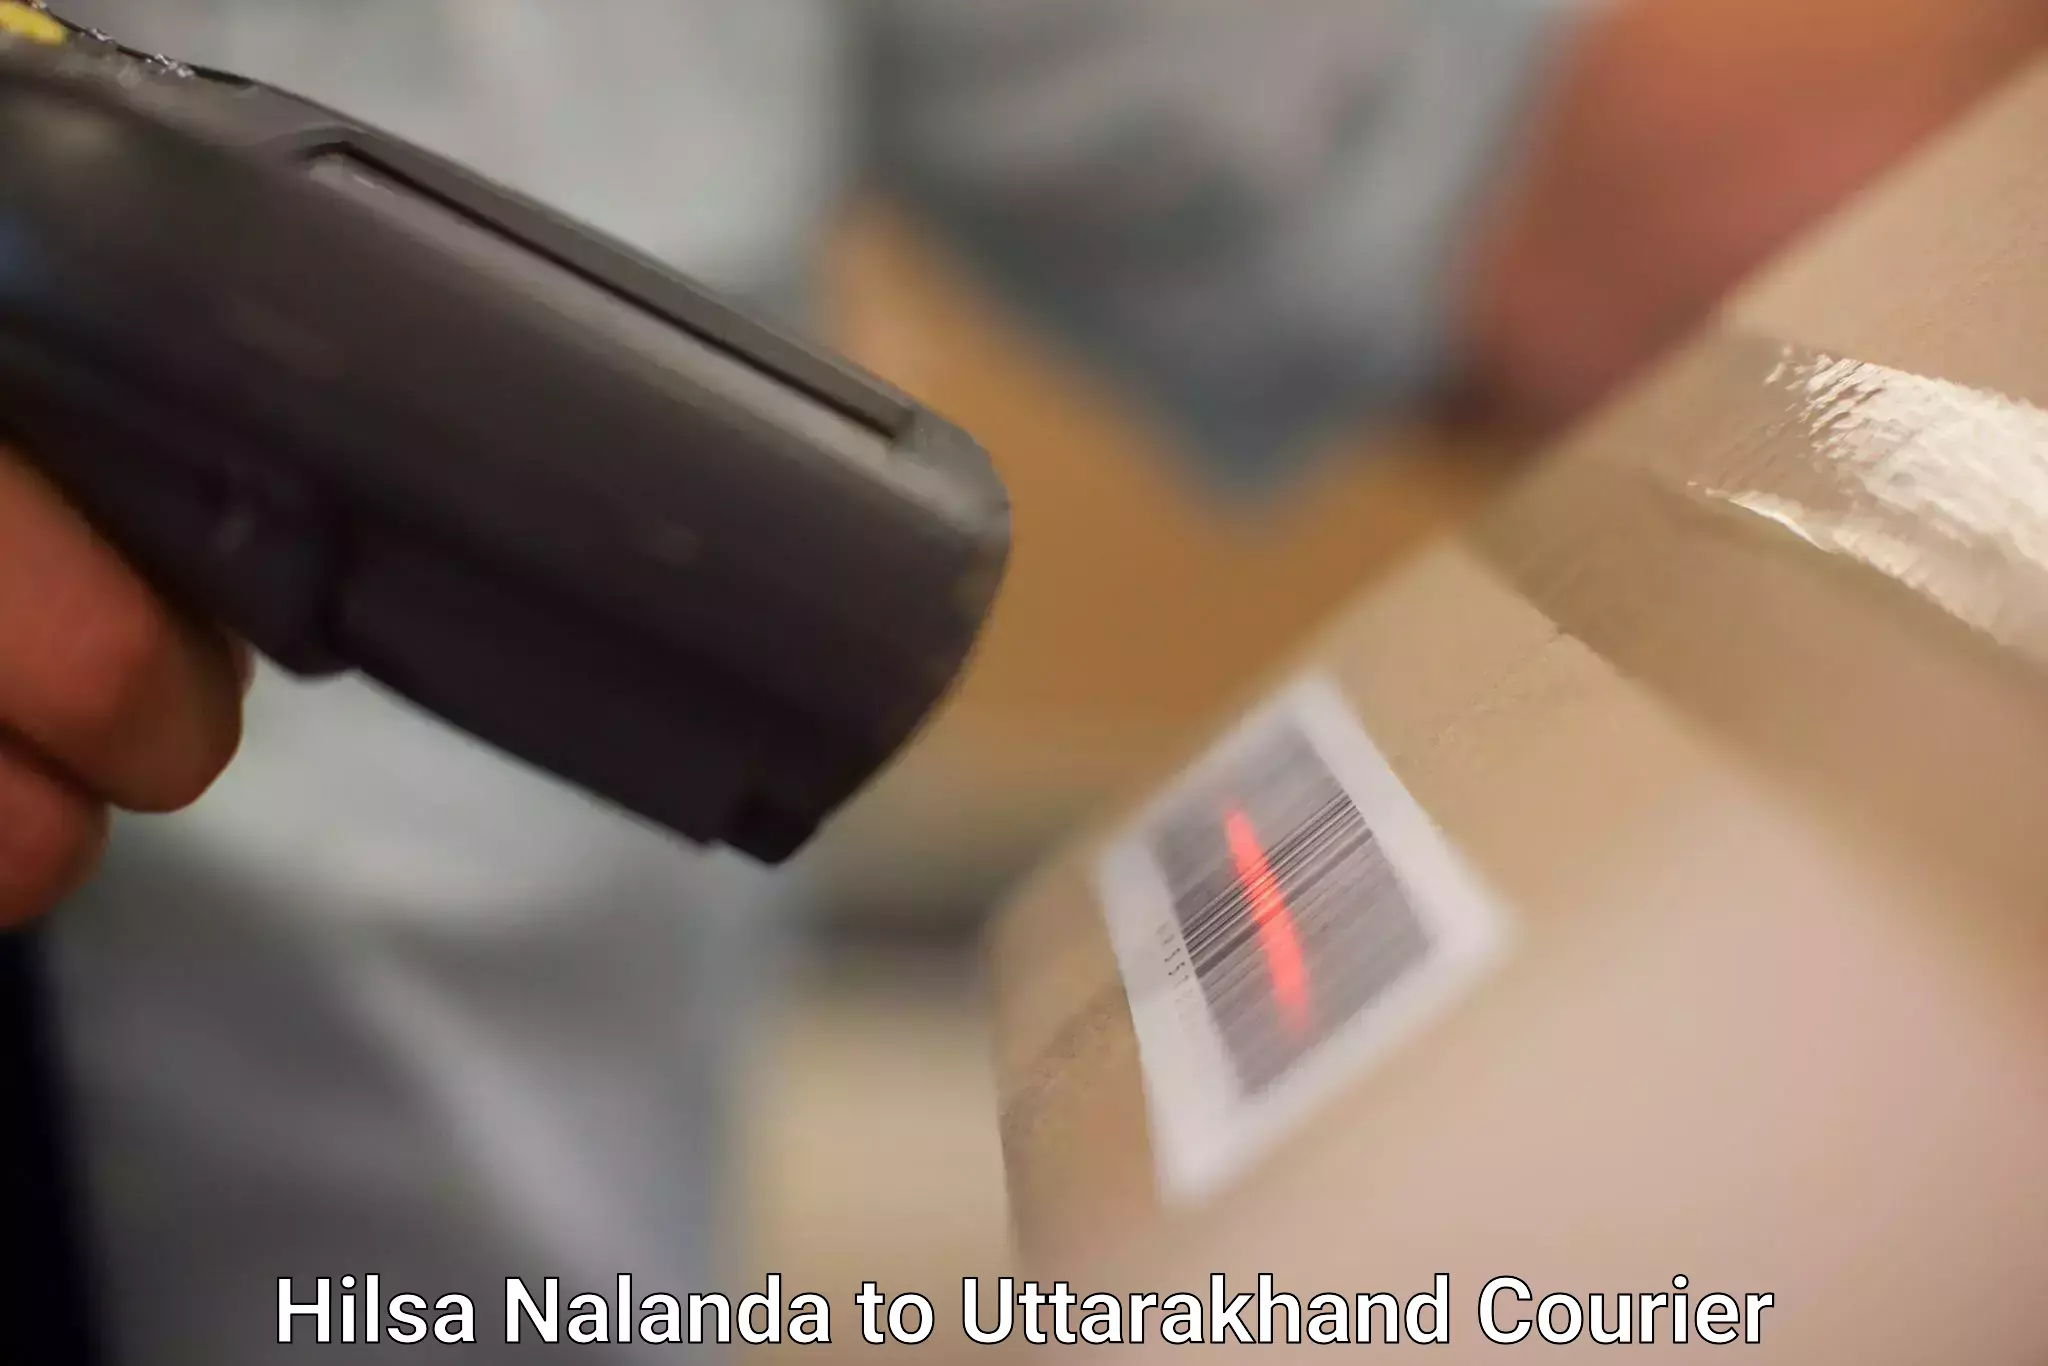 Courier service comparison Hilsa Nalanda to IIT Roorkee